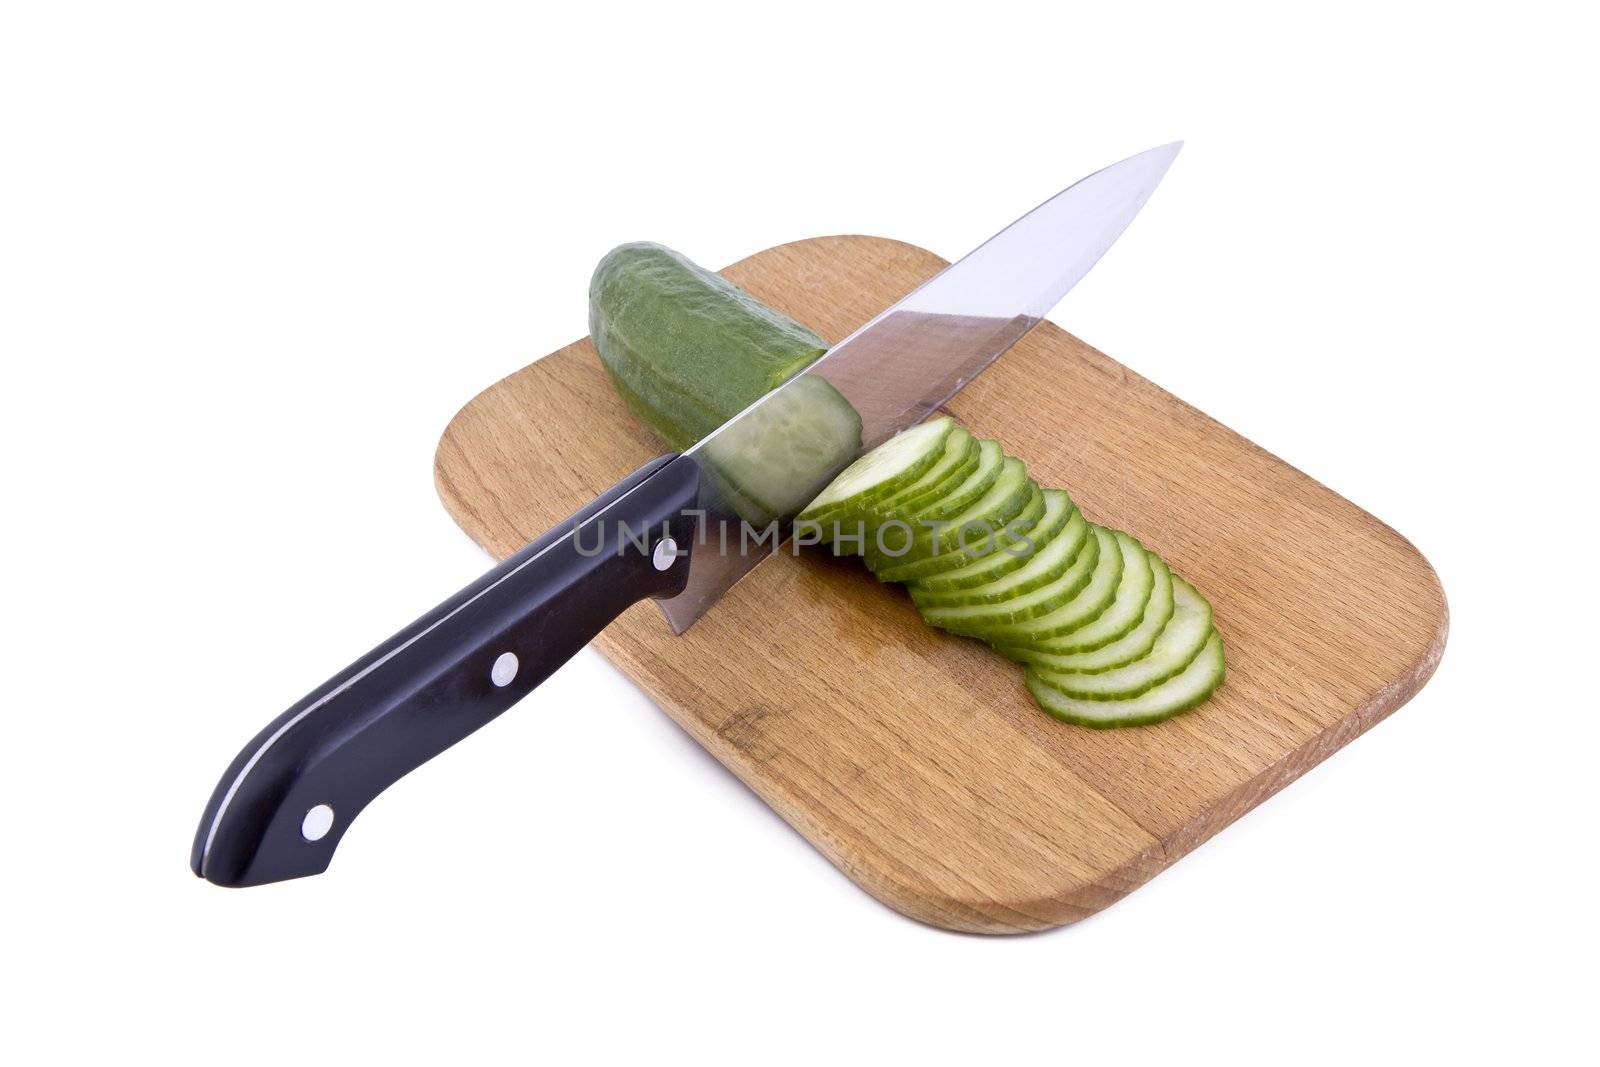 Cucumber and kitchen knife by Gbuglok